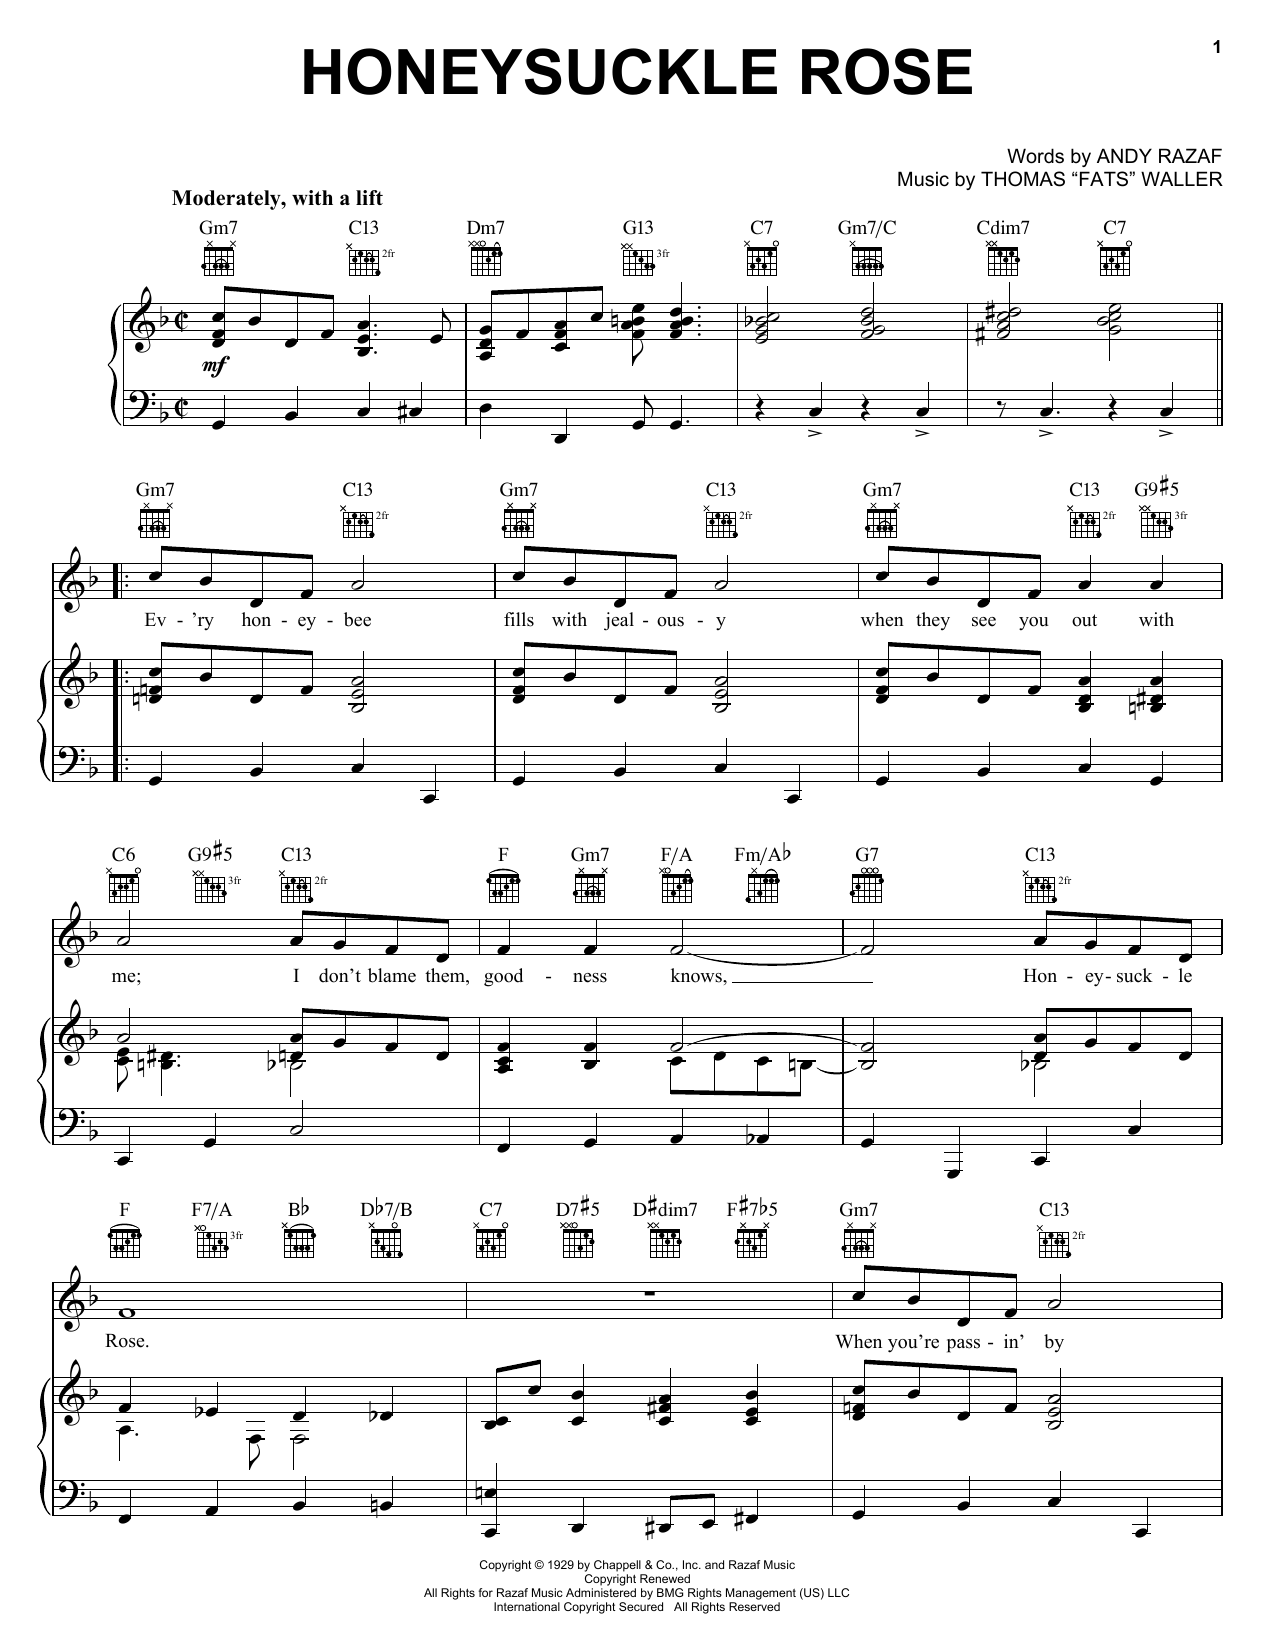 Download Django Reinhardt Honeysuckle Rose Sheet Music and learn how to play Guitar Tab PDF digital score in minutes